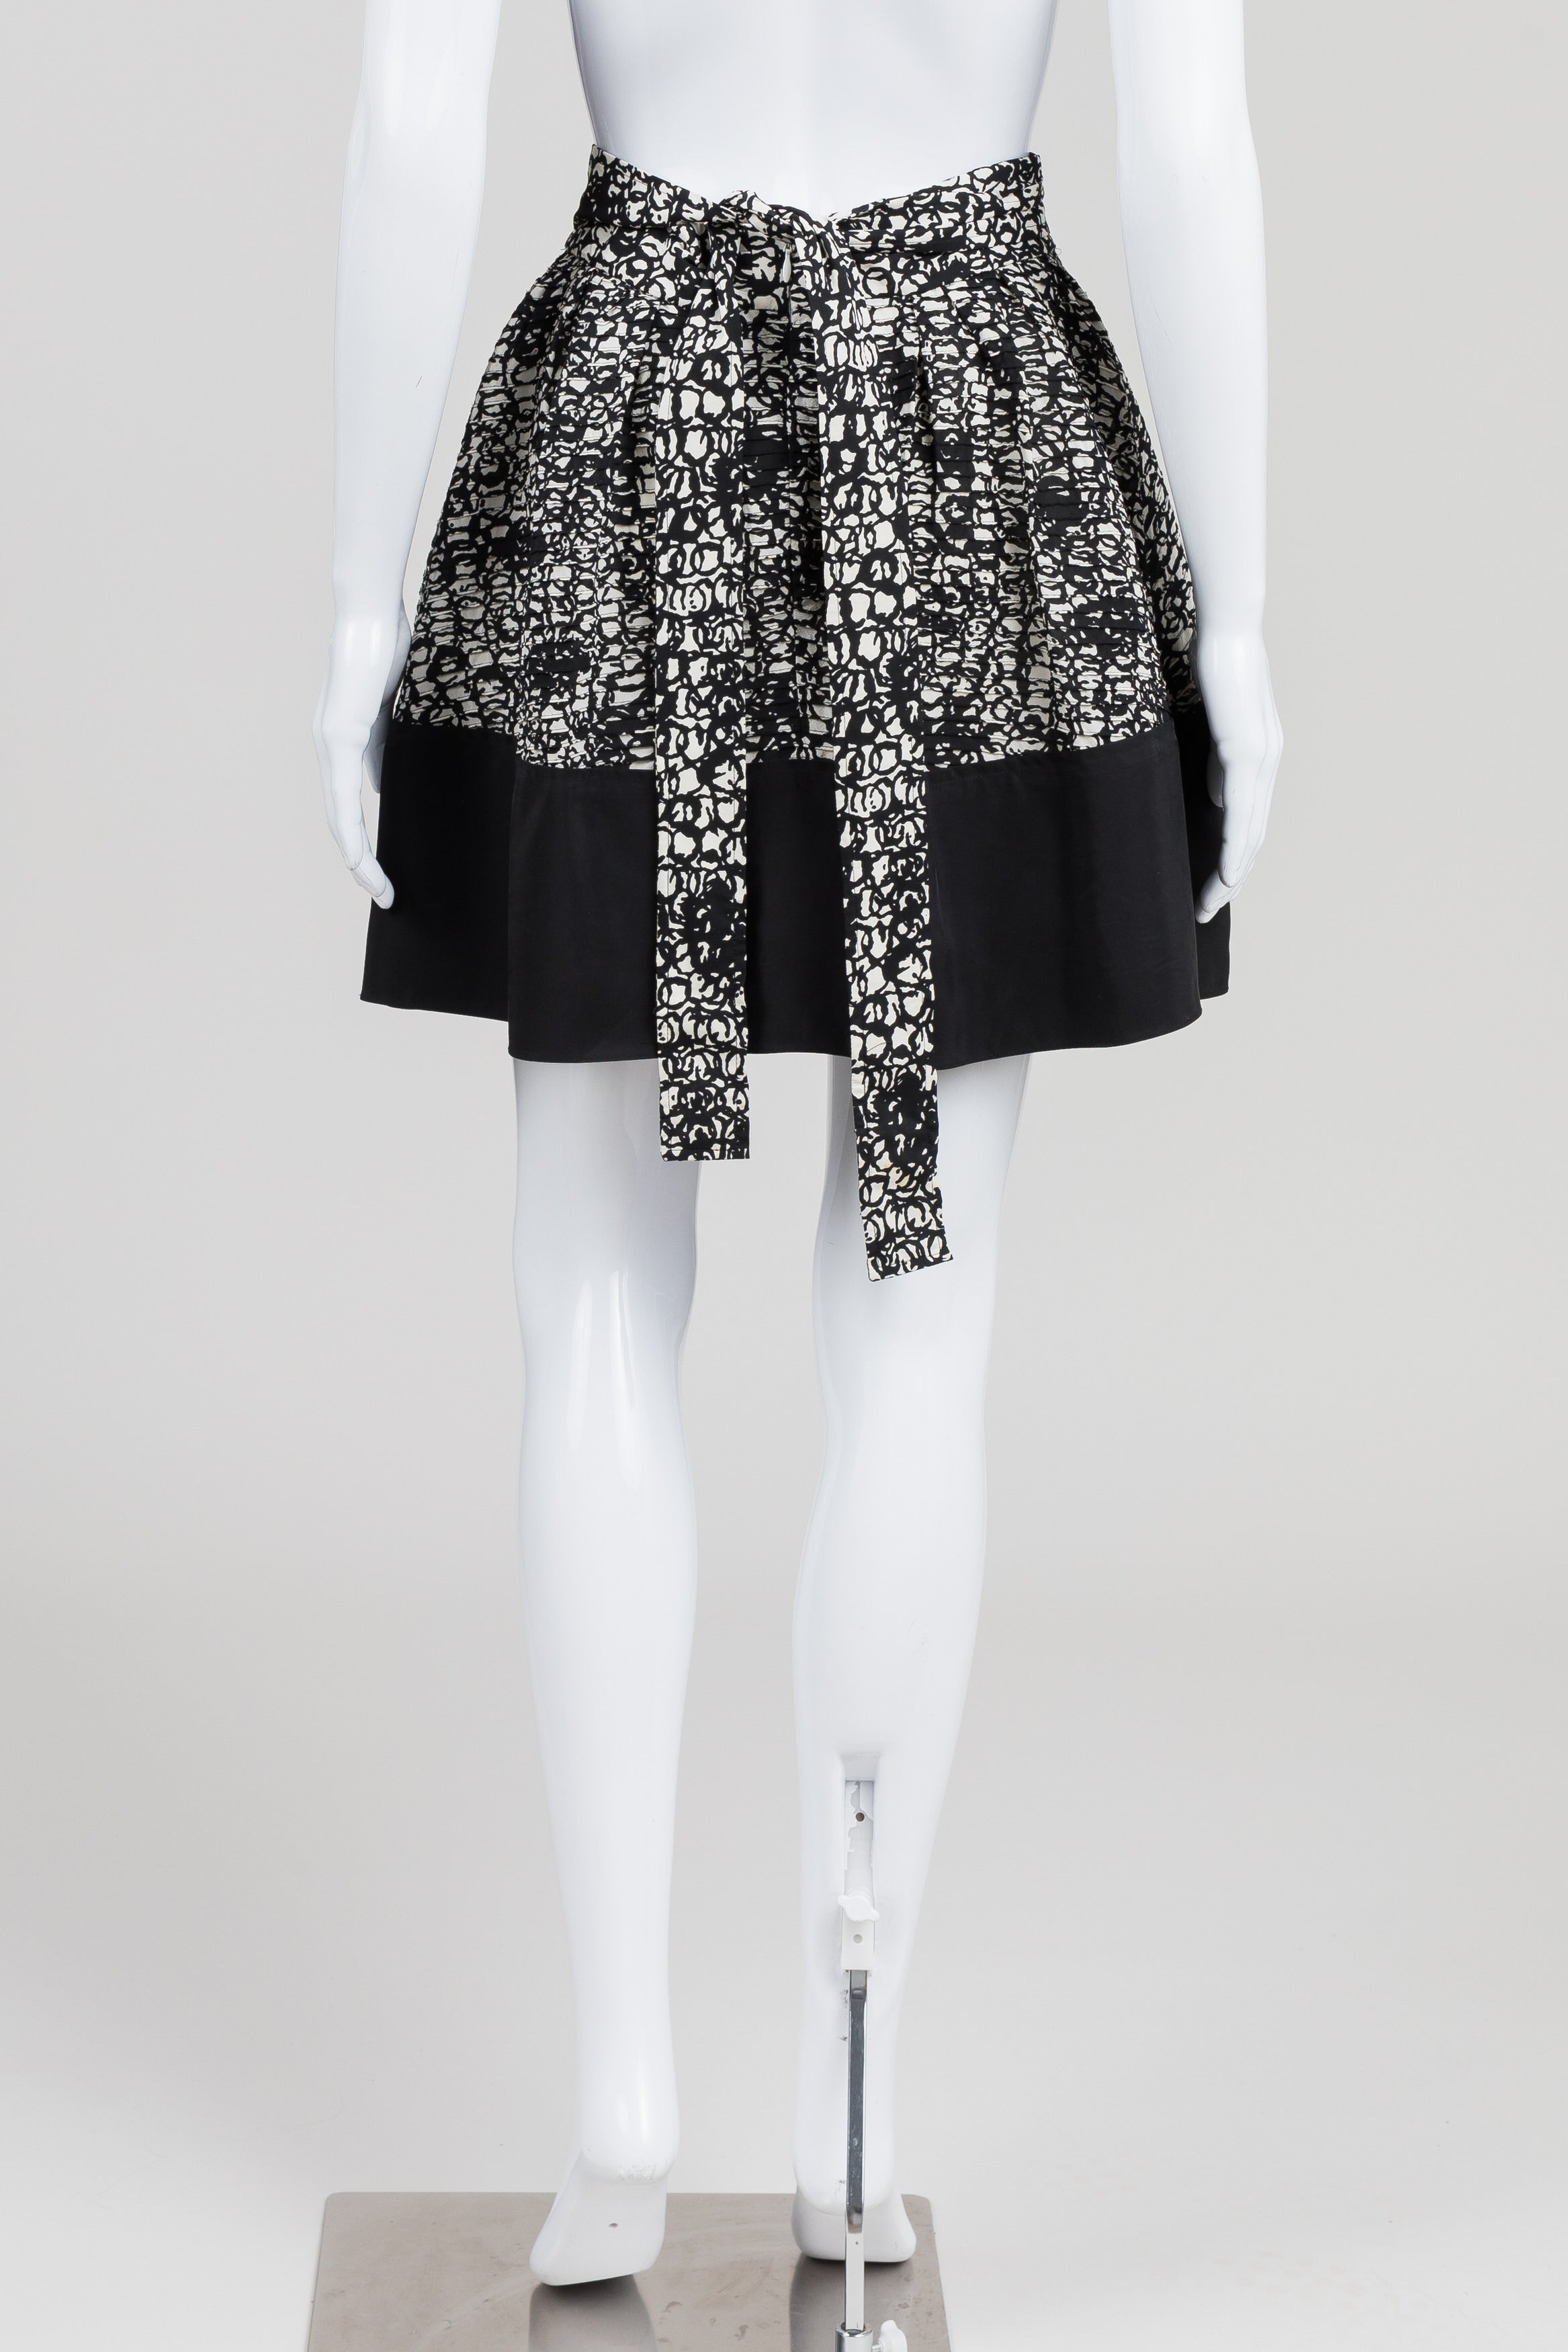 Balenciaga Silk Black/Cream Print Full Skirt w/ Belt (36)